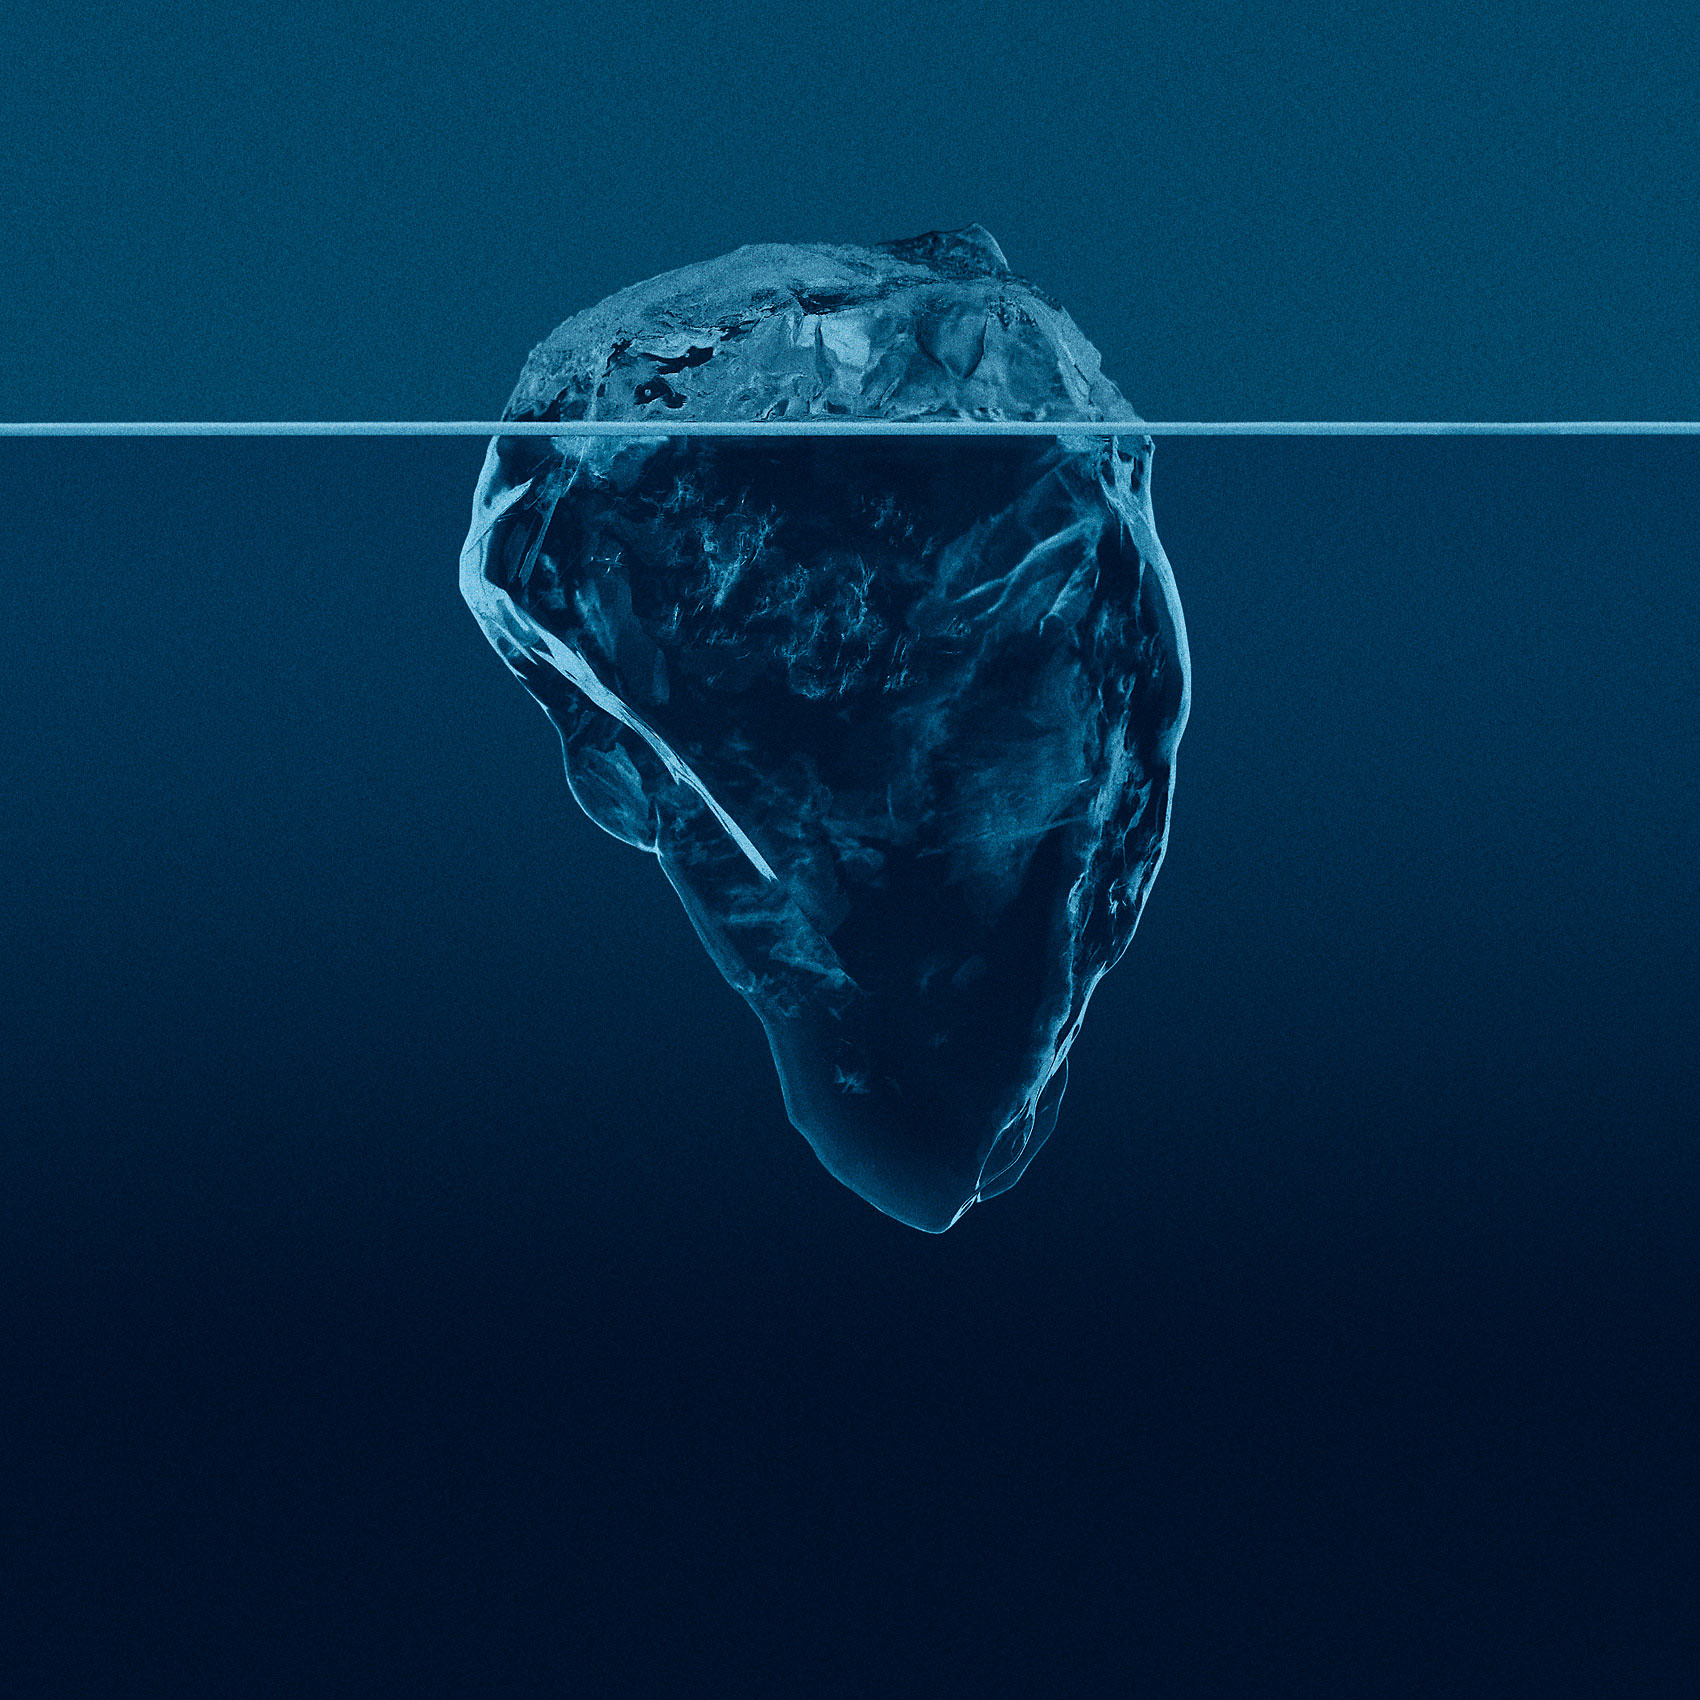 Nick_Rees-Iceberg-5233